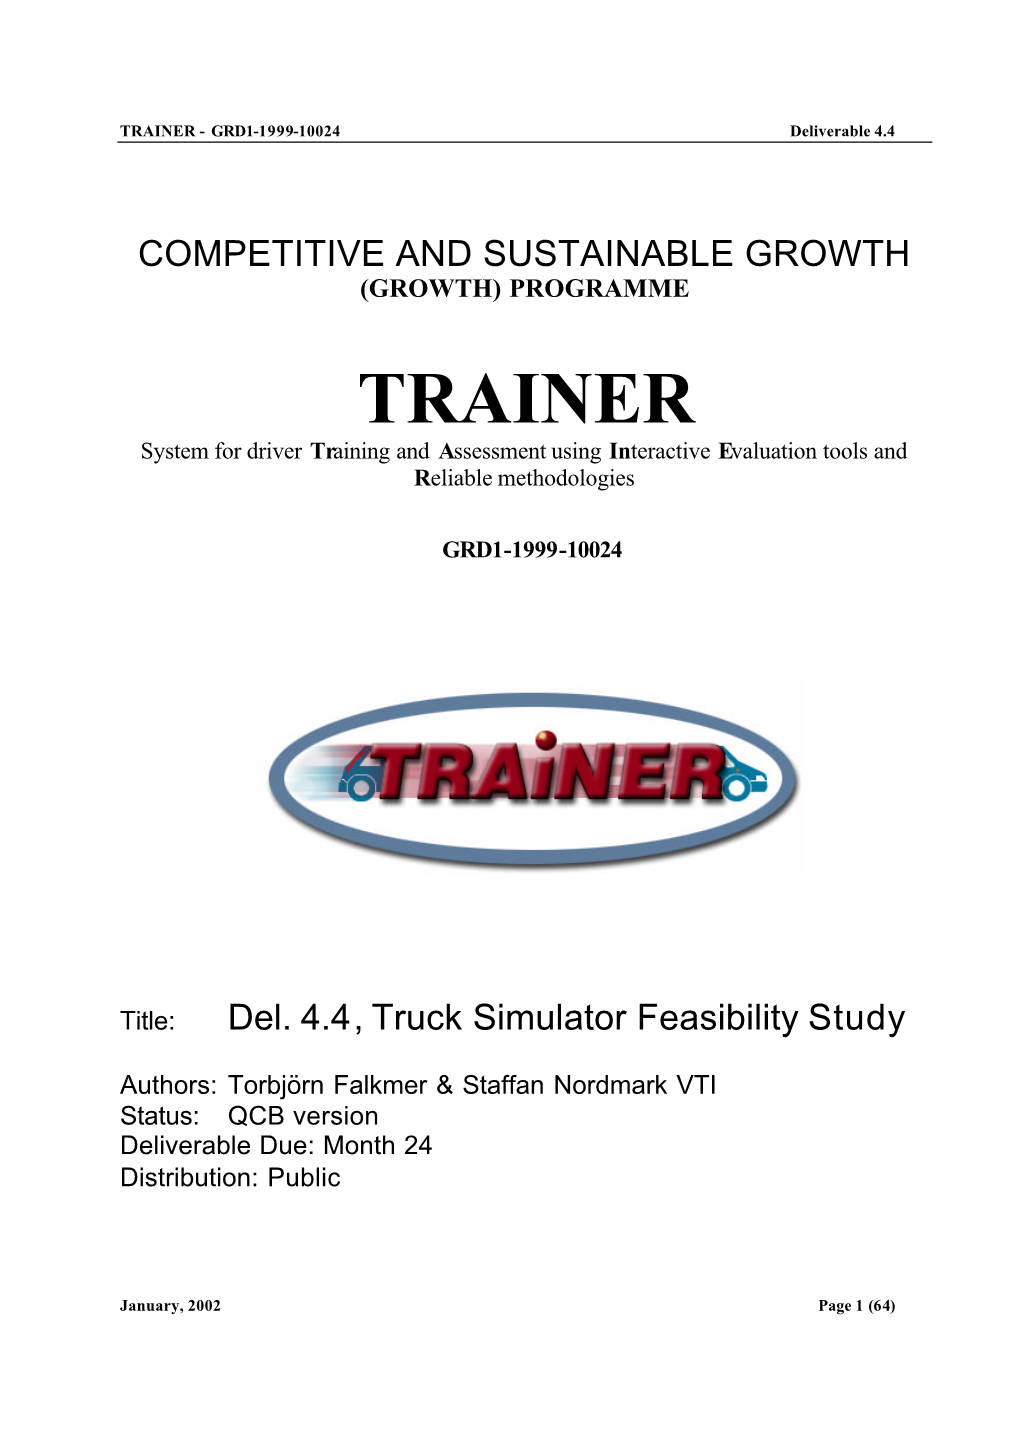 Truck Simulator Feasibility Study